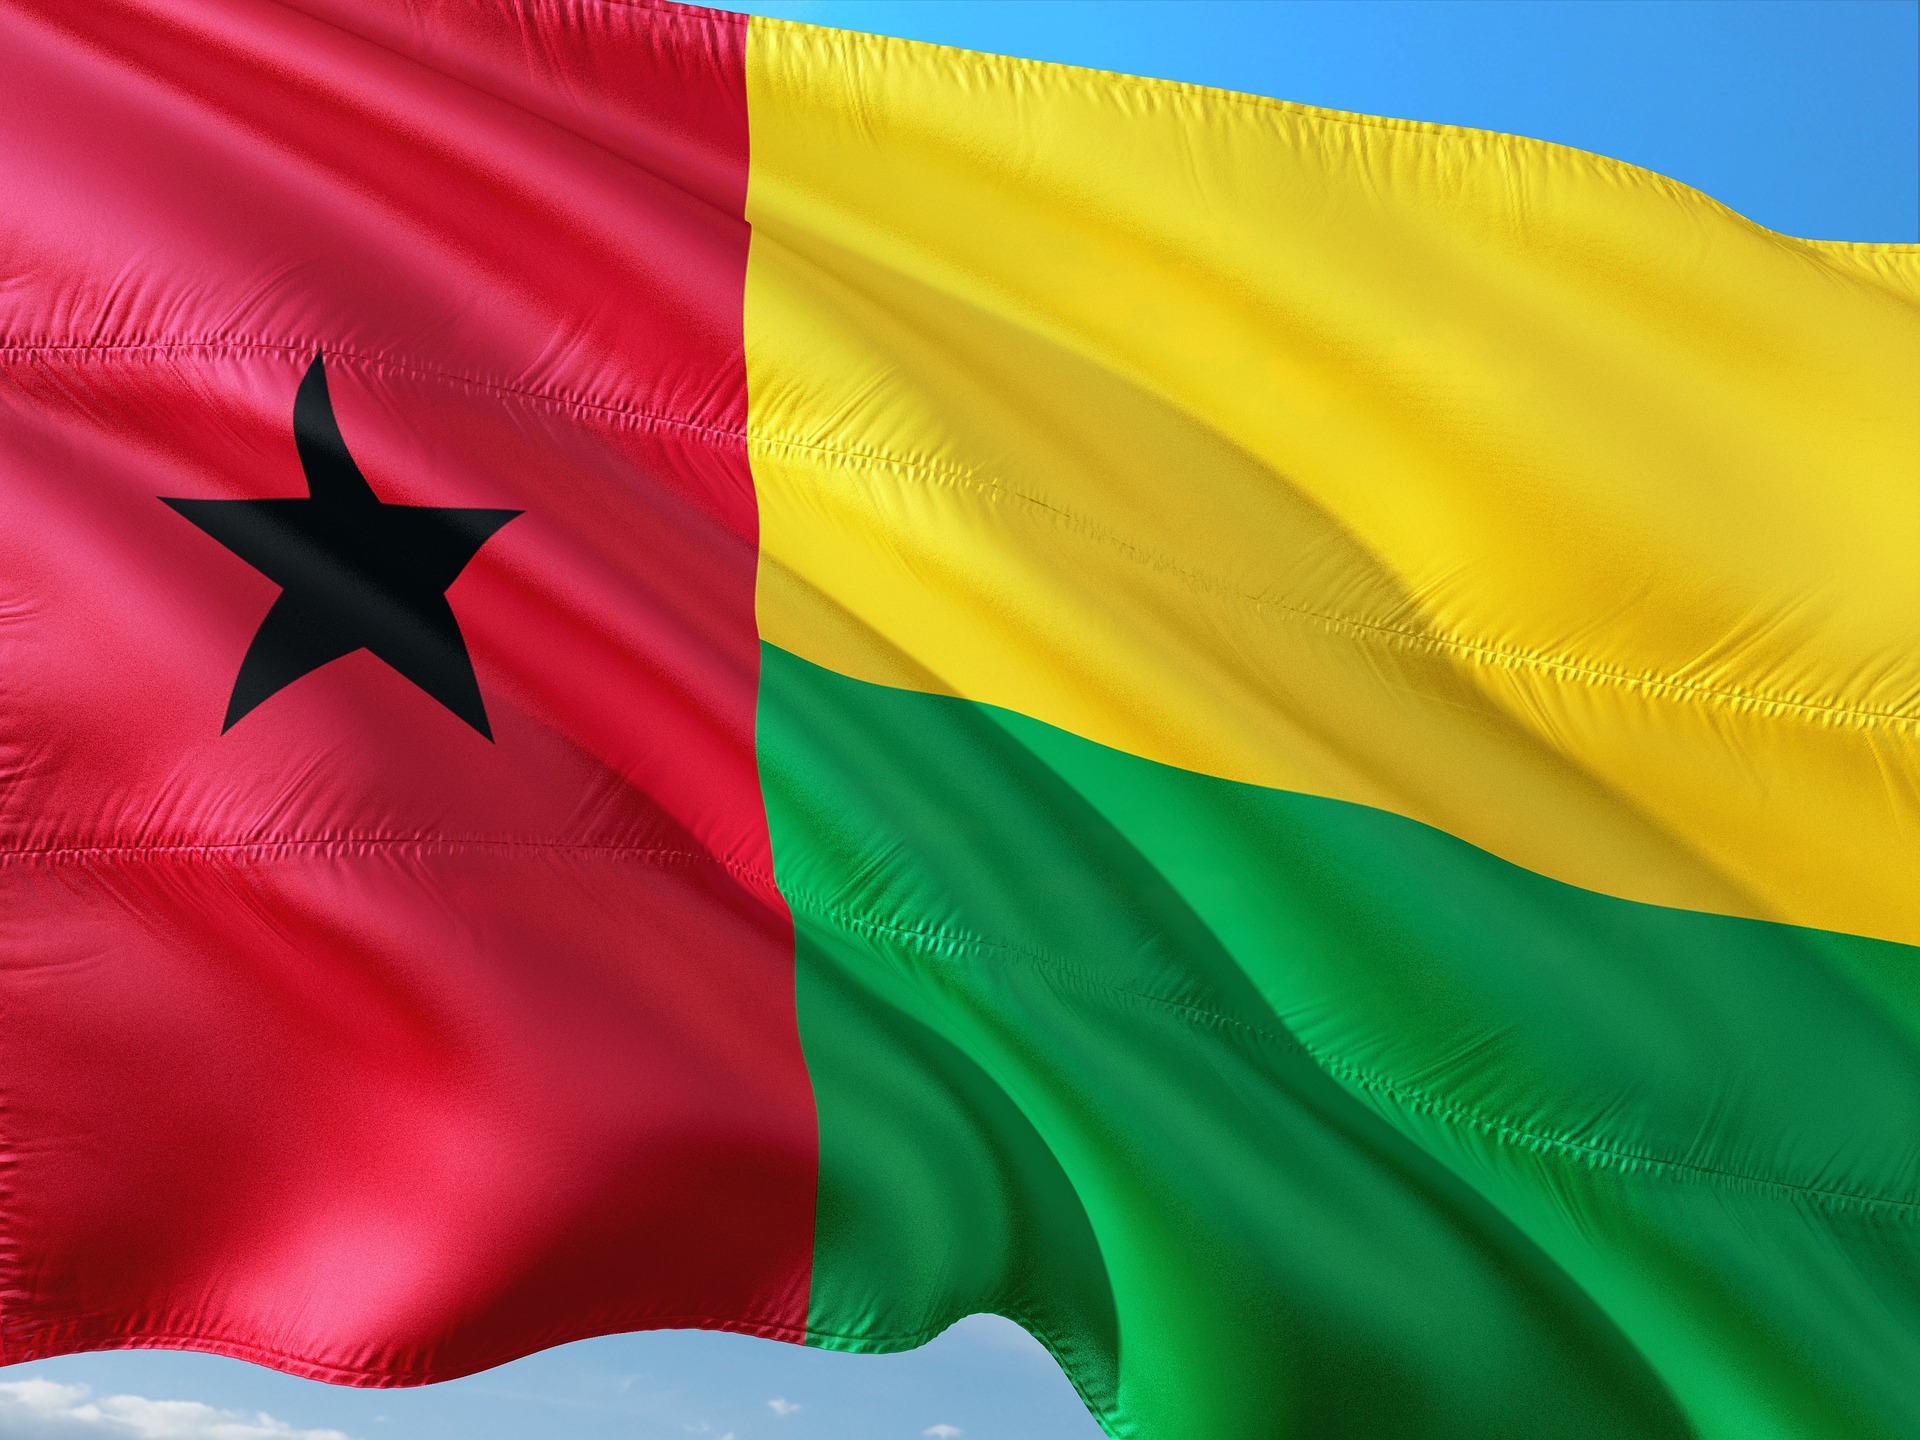 El primer ministro de Portugal visitó Guinea-Bissau